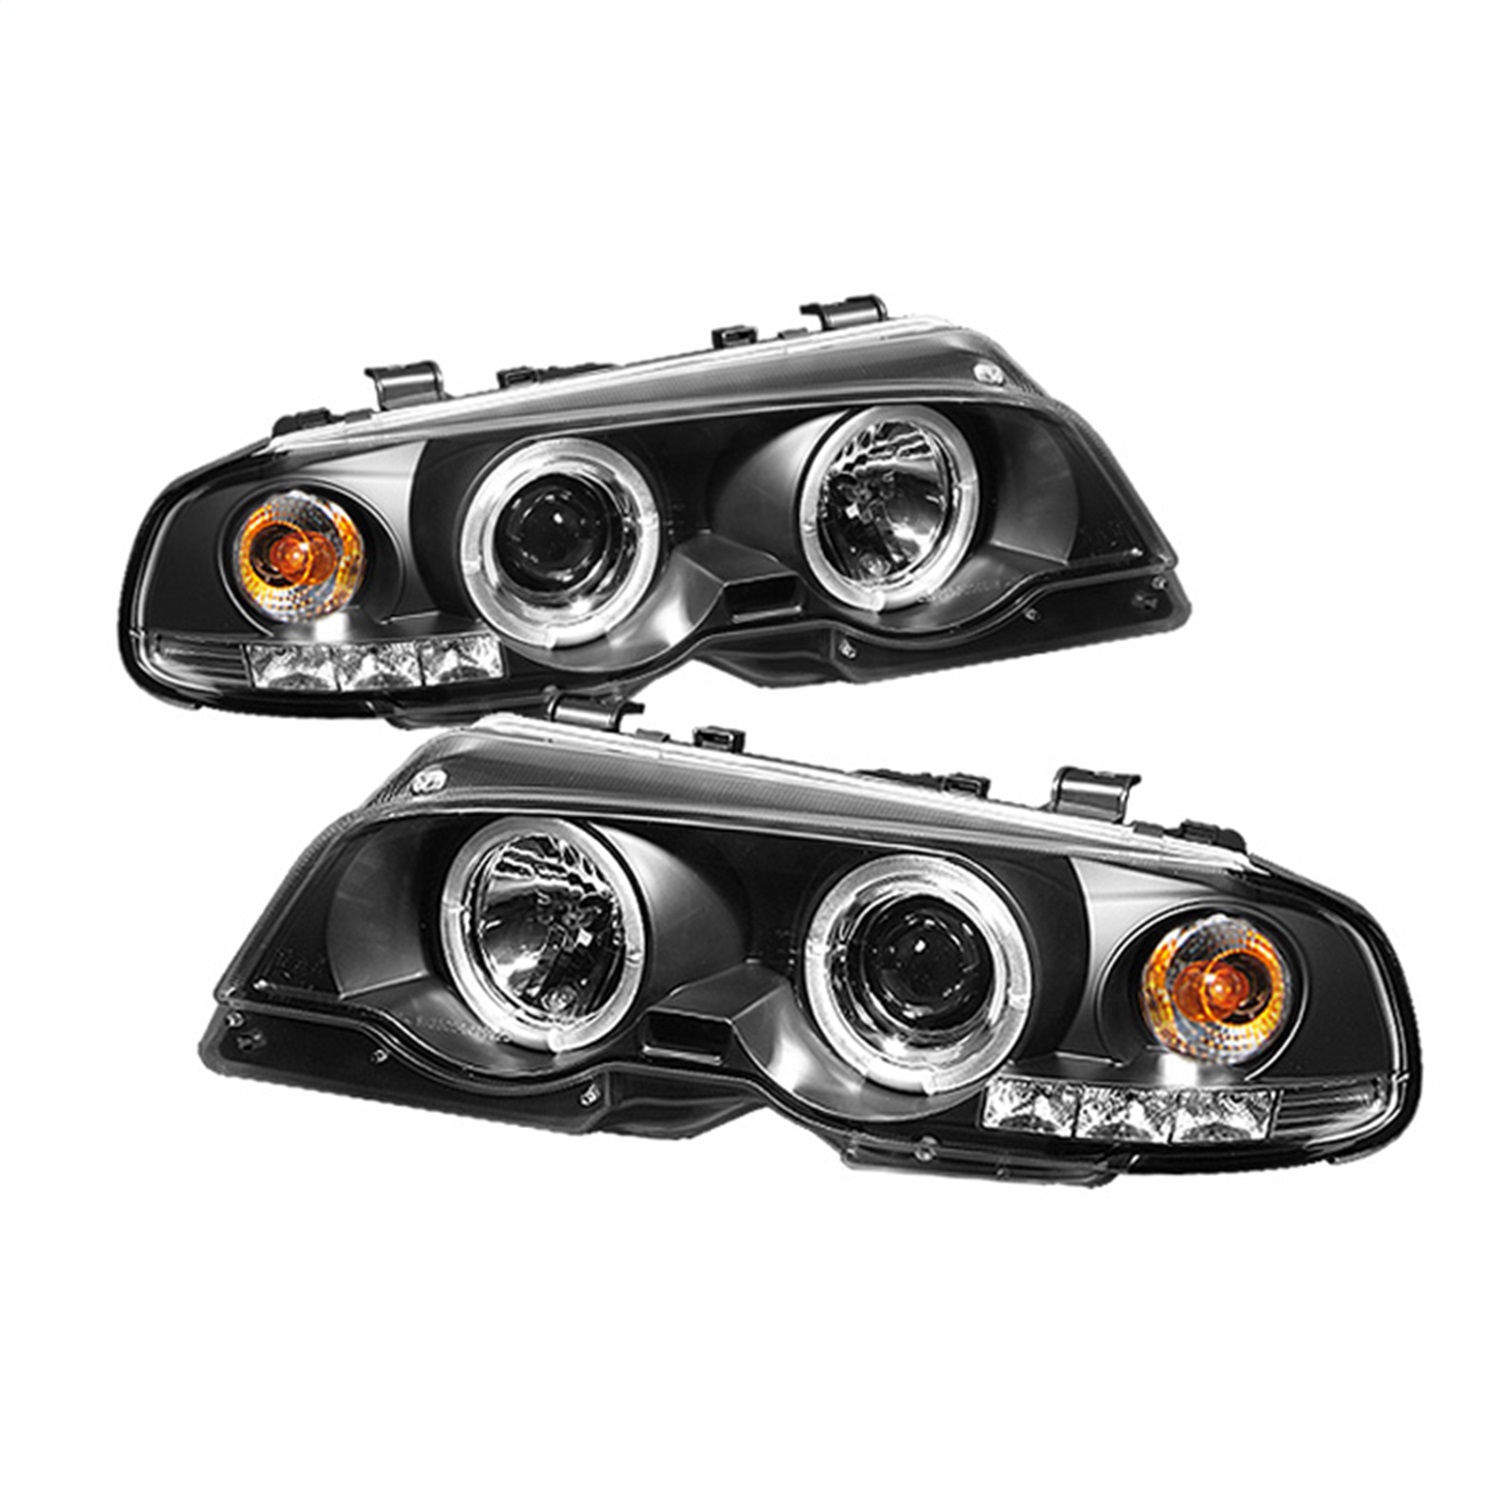 Spyder Auto 5008923 Halo Projector Headlights Fits 323Ci 325Ci 328Ci 330Ci M3